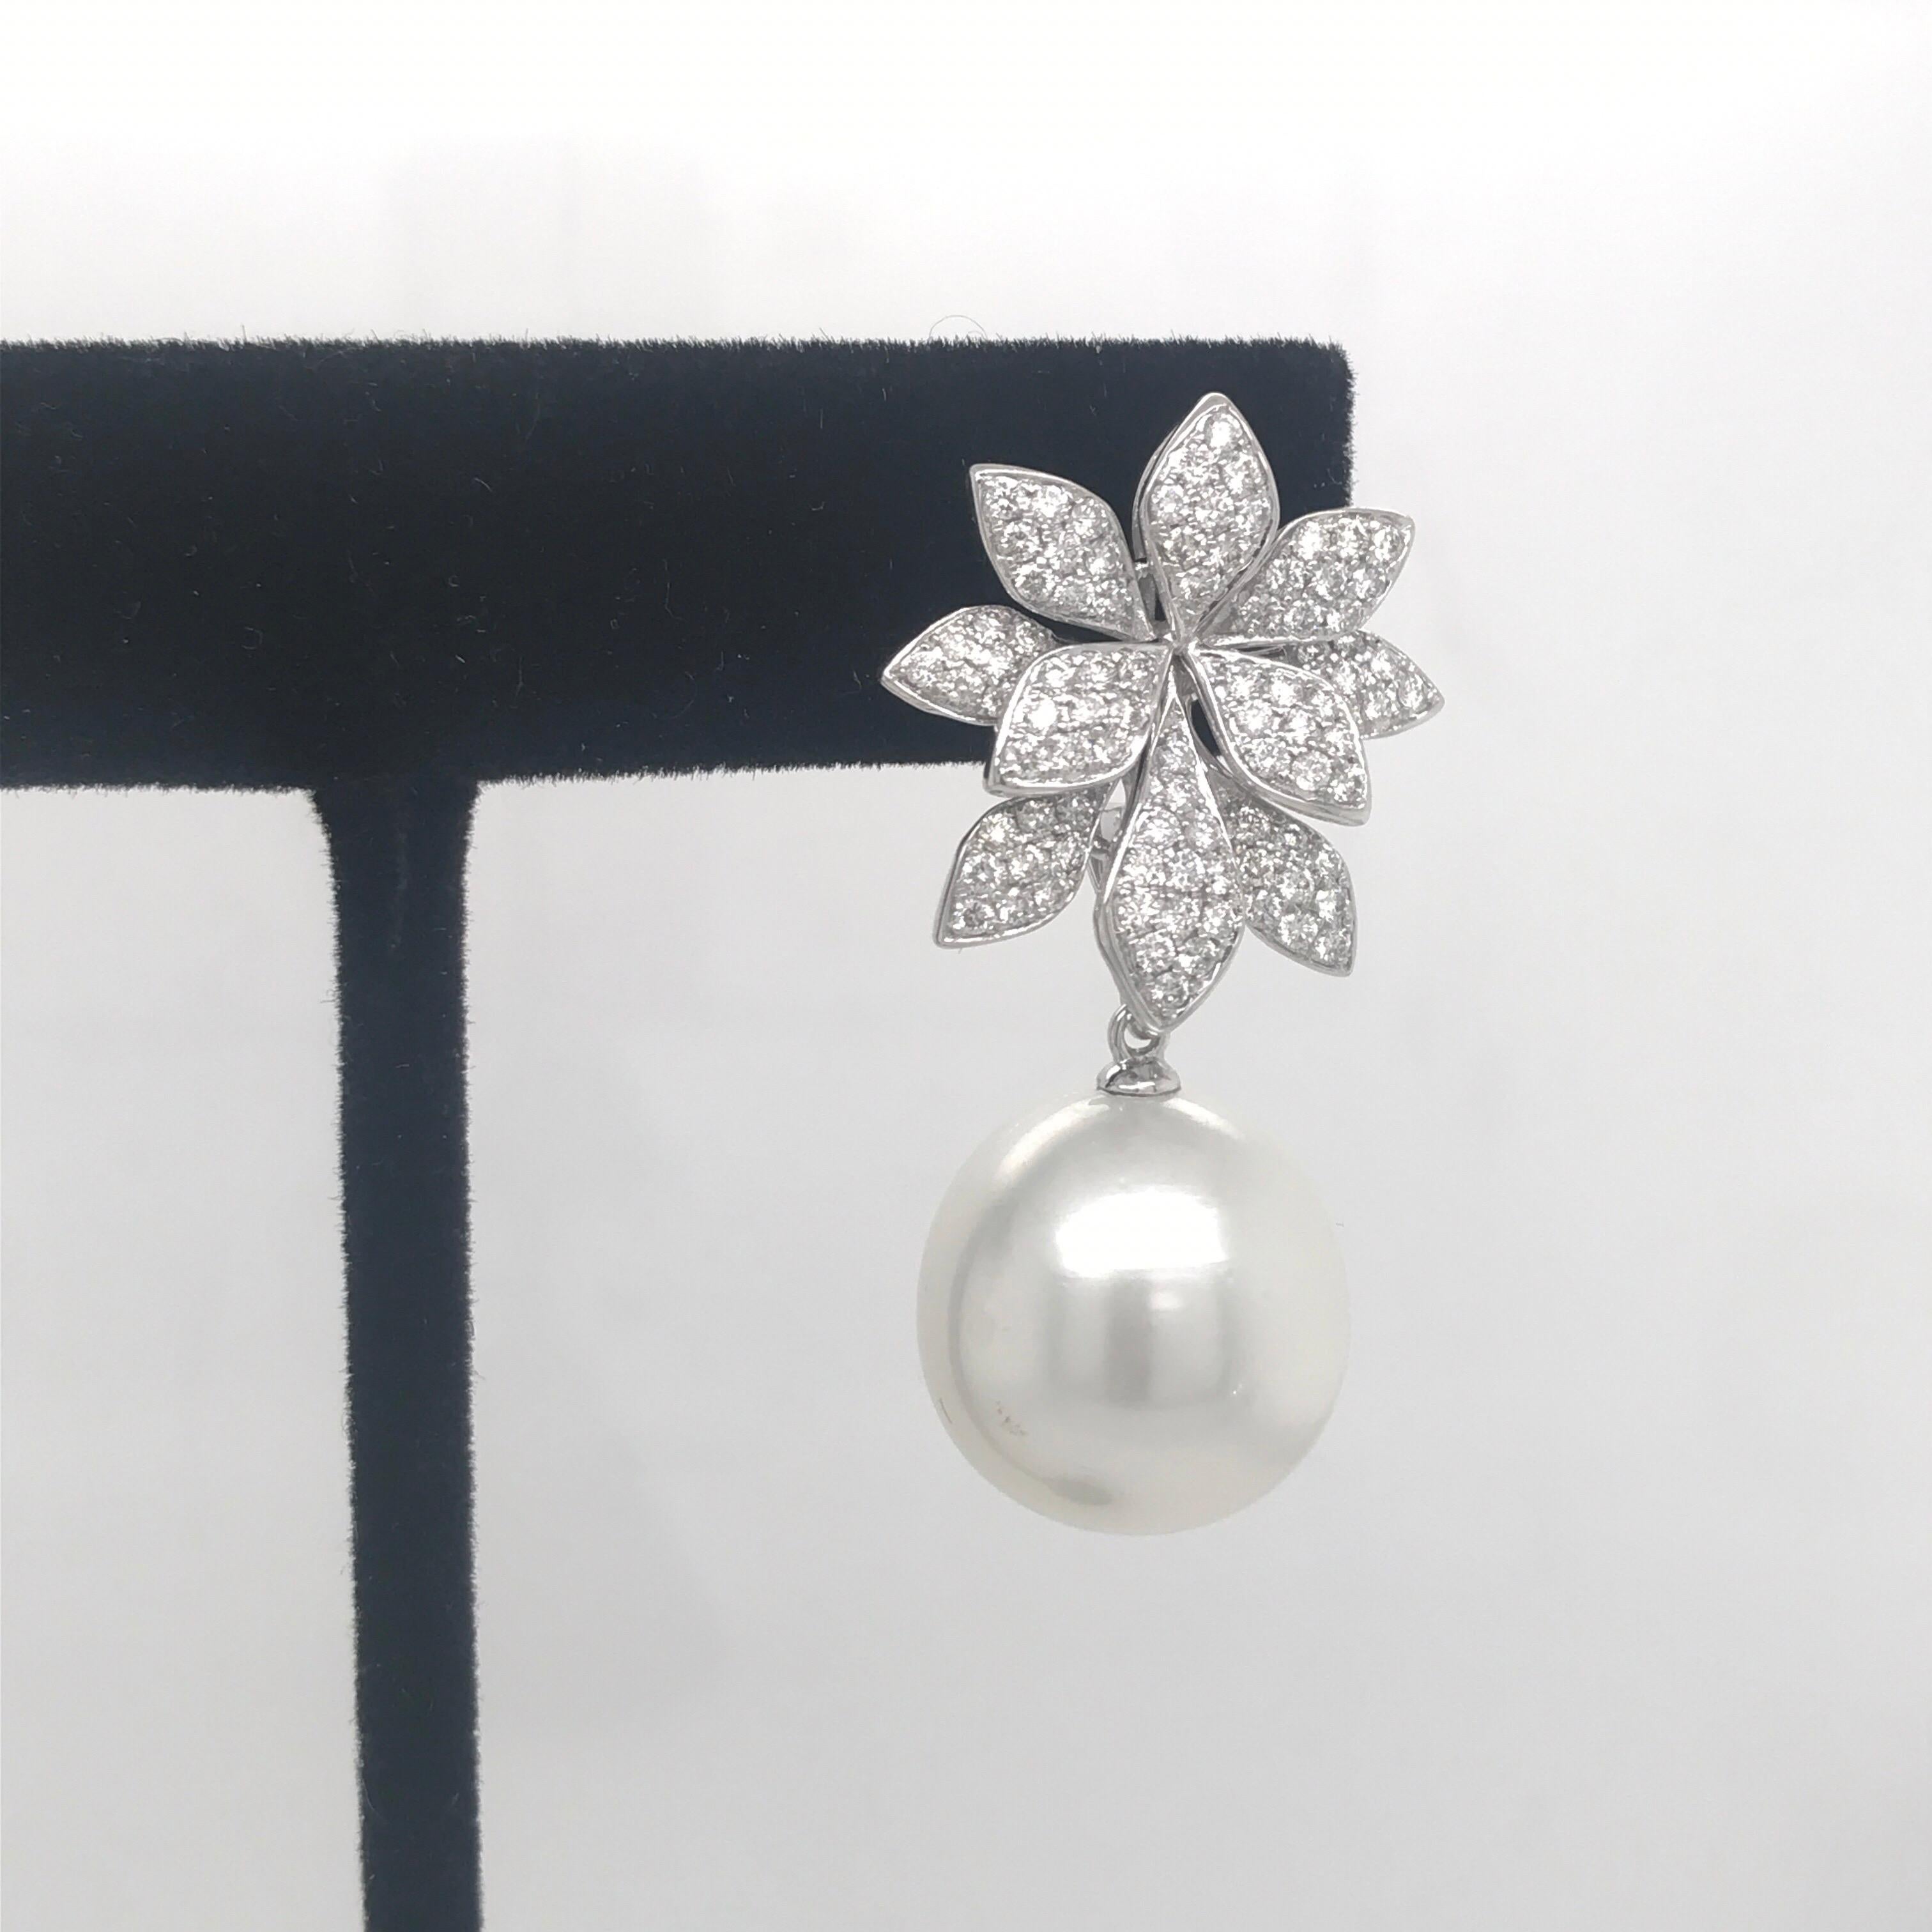 Contemporary Diamond Floral South Sea Pearl Earrings 1.62 Carat 18 Karat White Gold